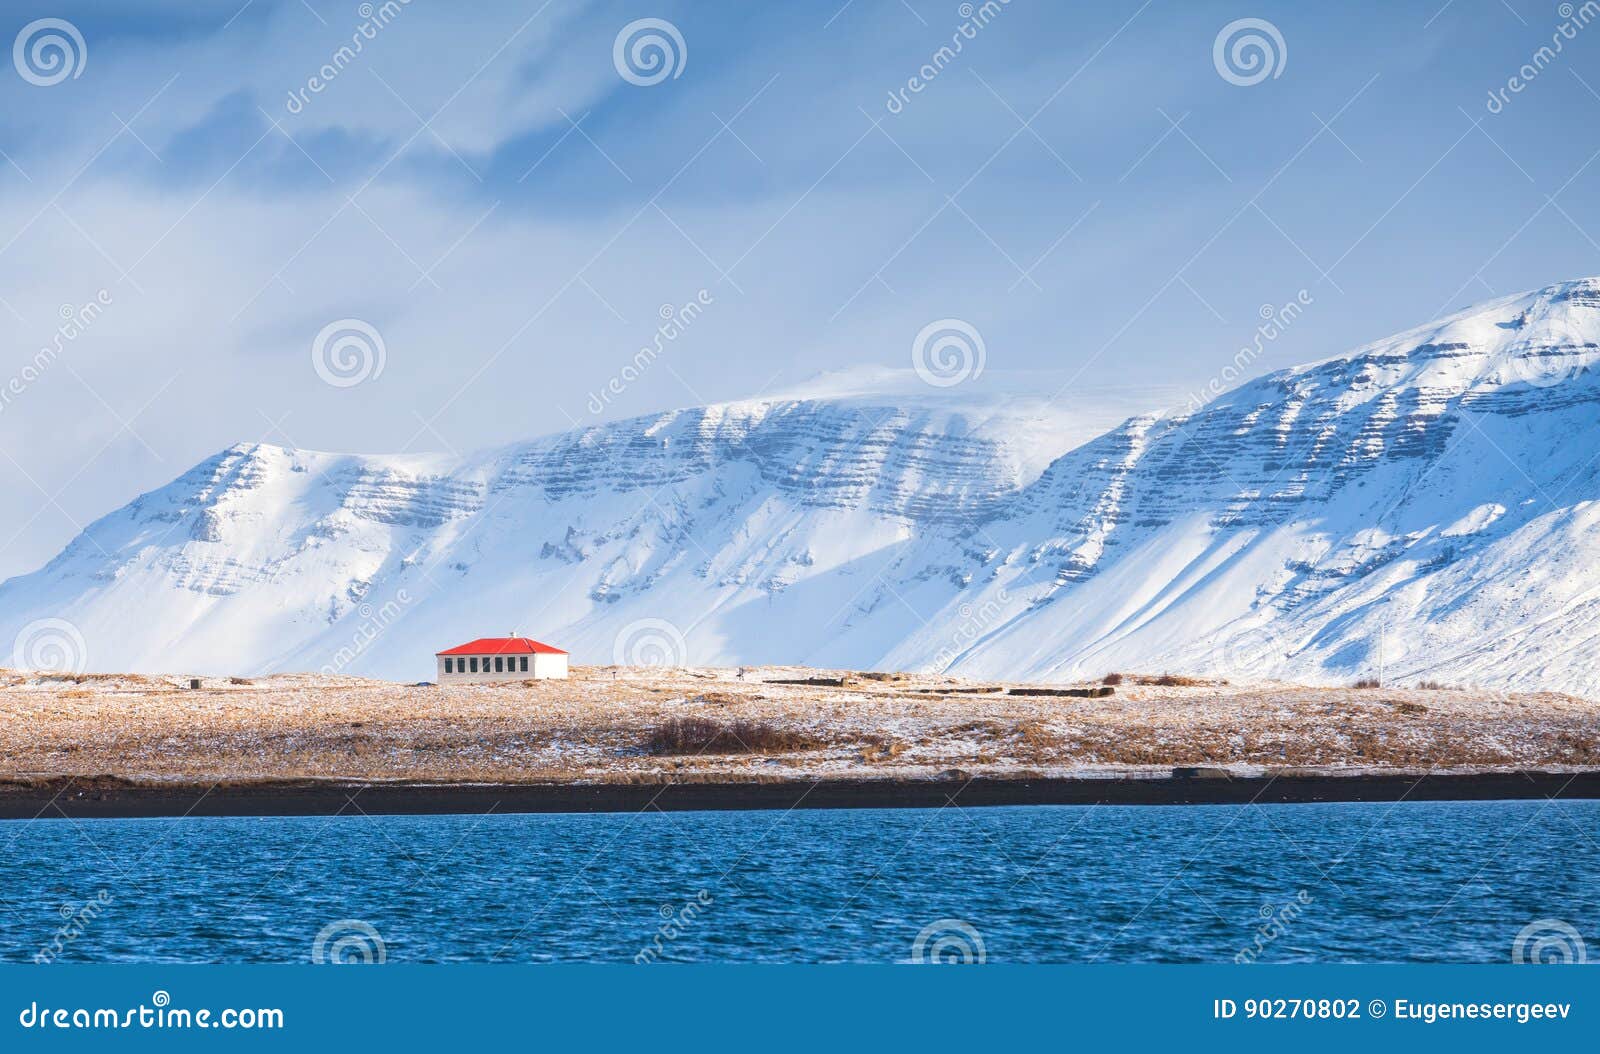 Coastal Icelandic Landscape with Snowy Mountains Stock Photo - Image of ...